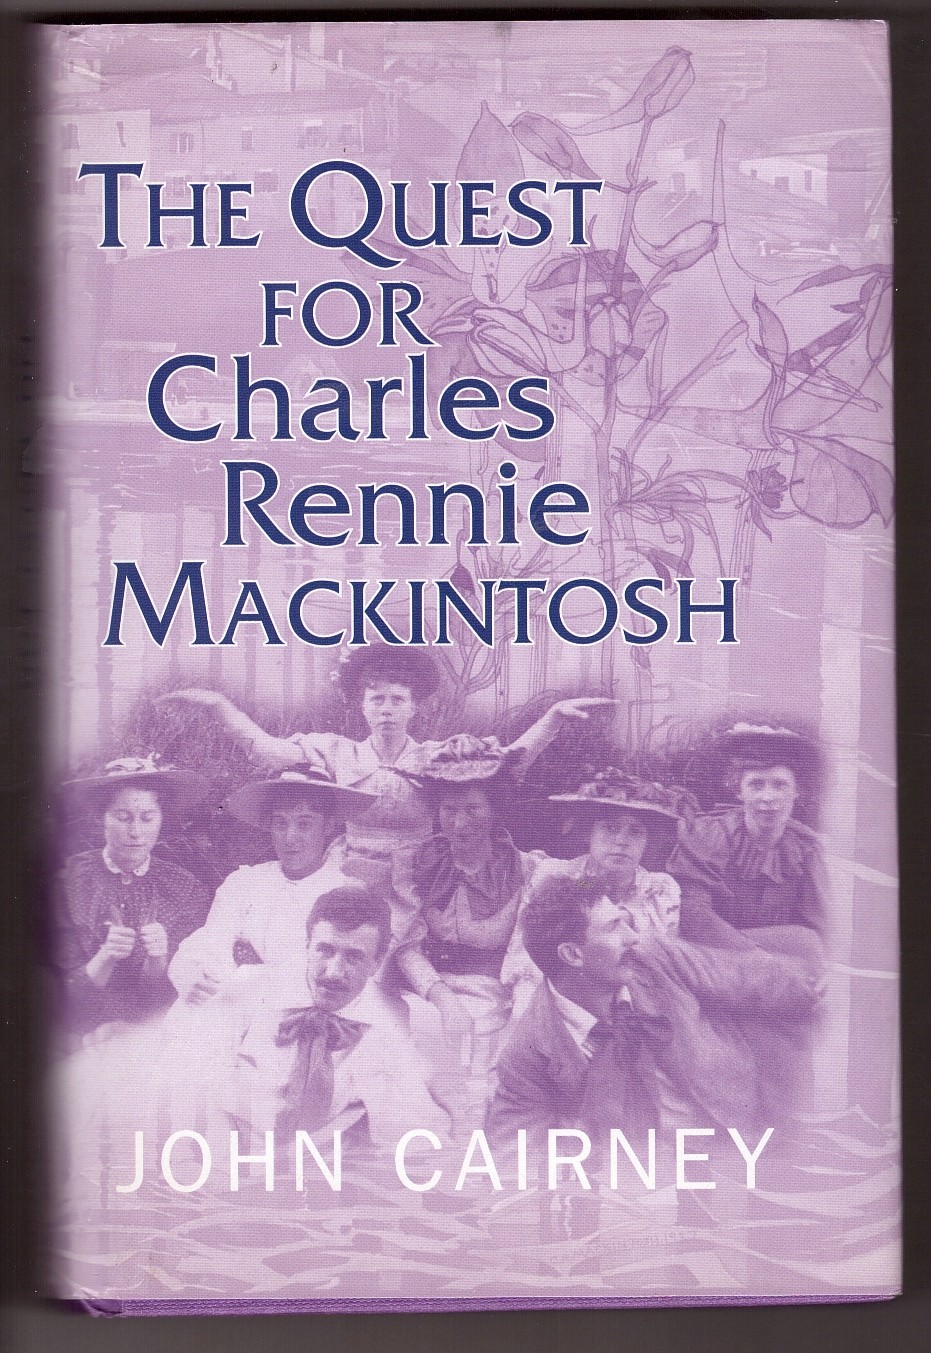 CAIRNEY, JOHN - Quest for Charles Rennie Mackintosh